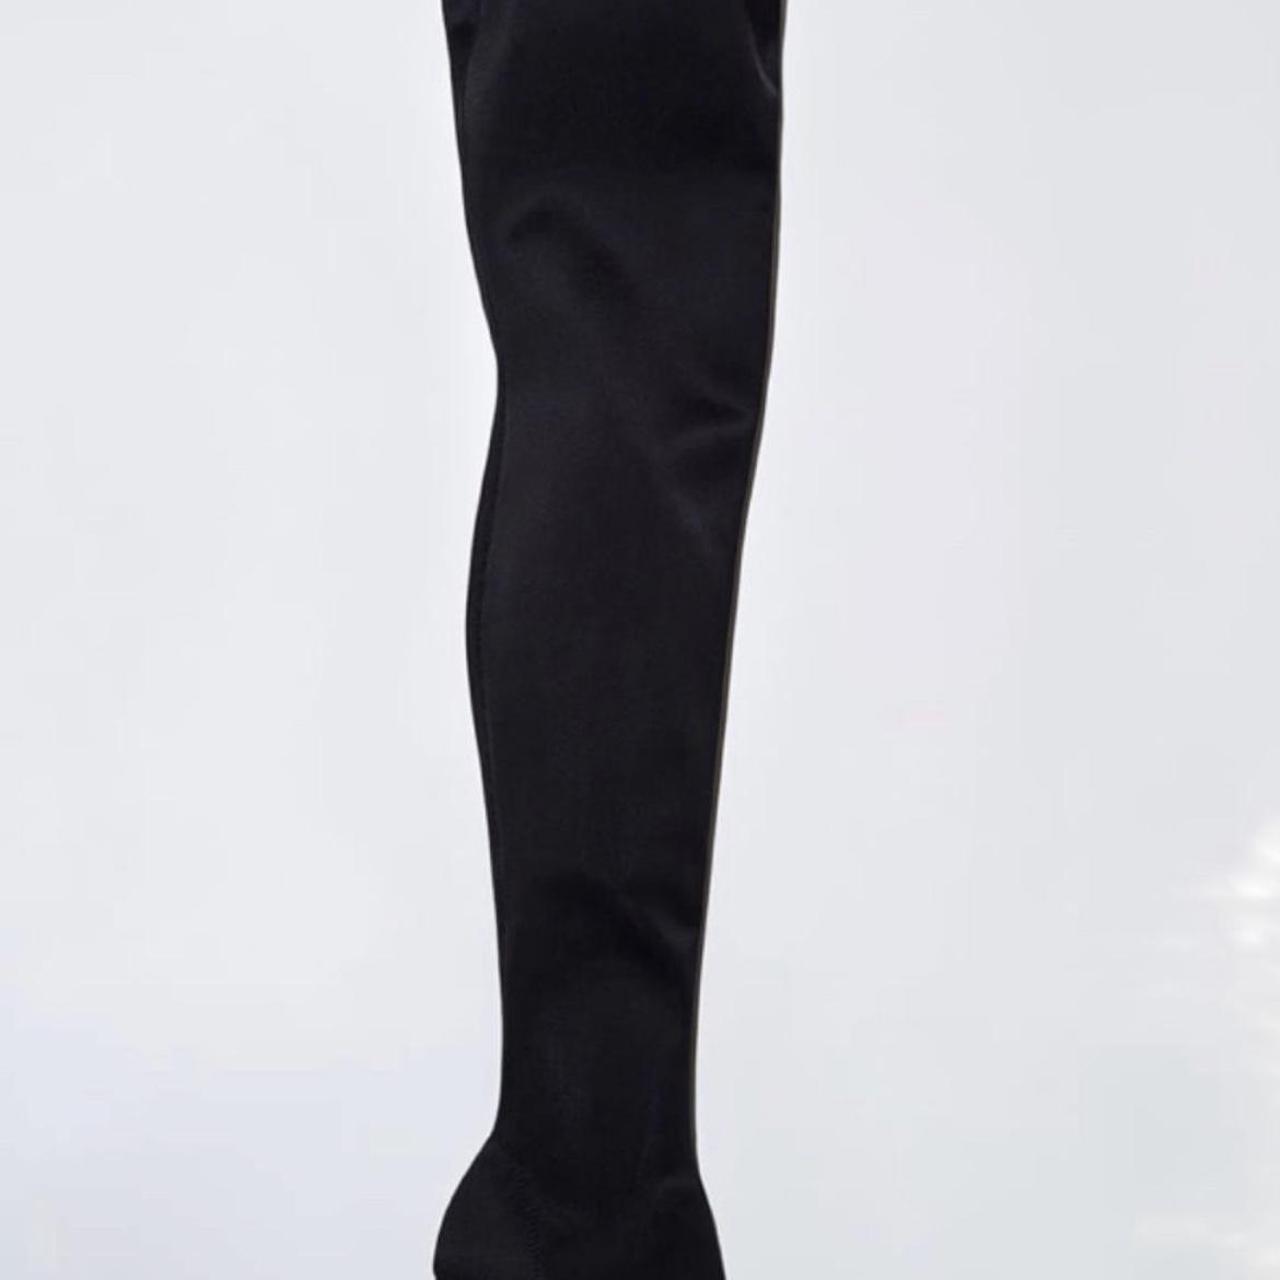 NWT Zara thigh high fabric boots Size 7.5 Black #zara - Depop